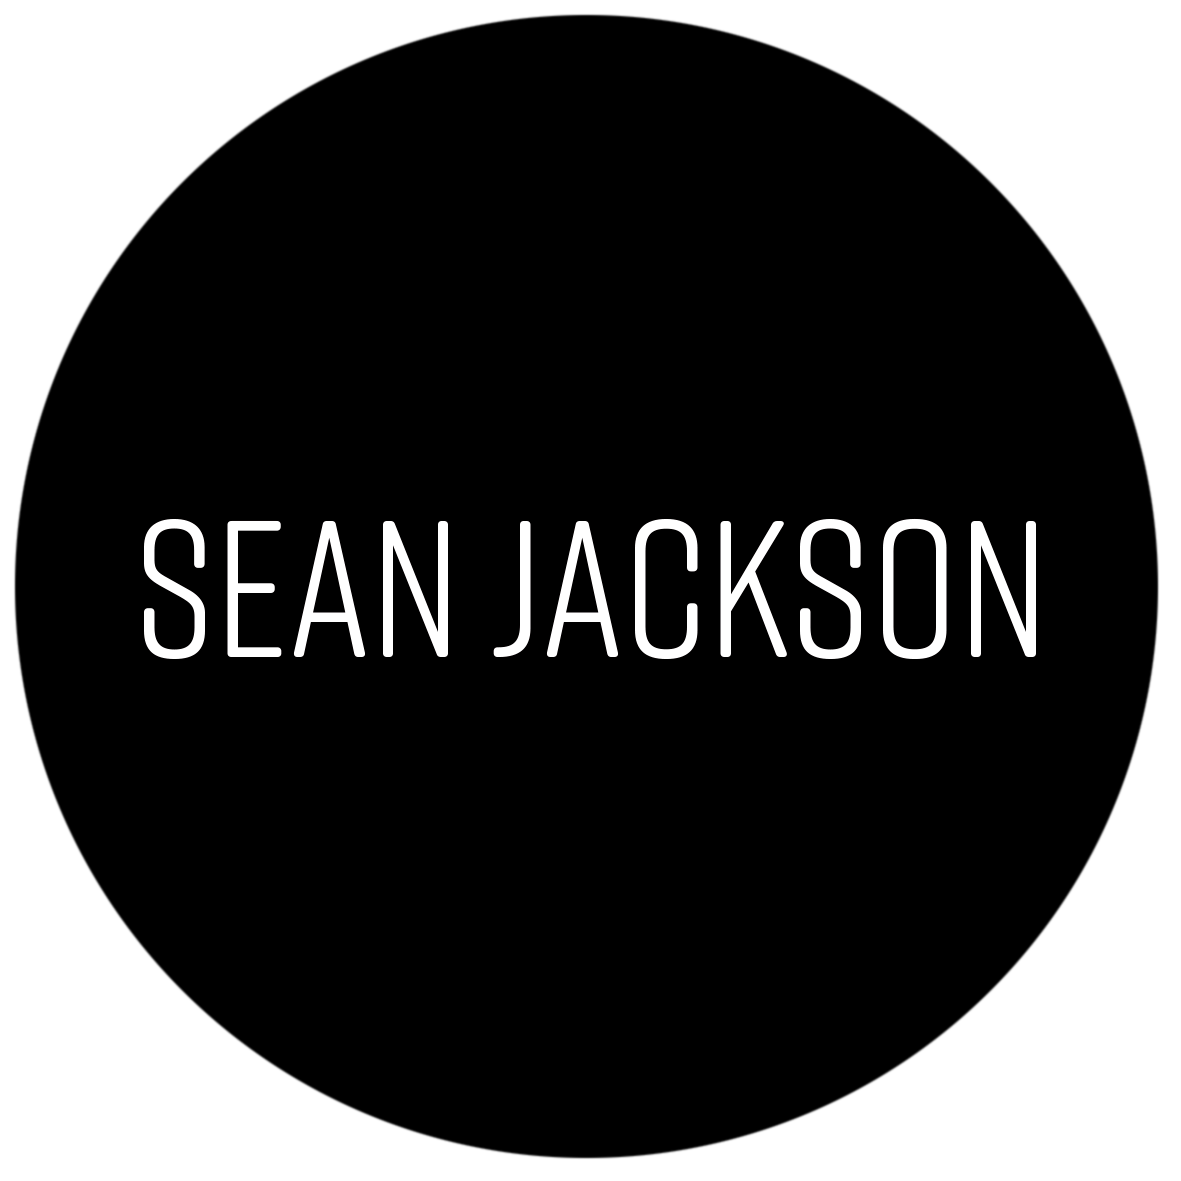 Sean Jackson